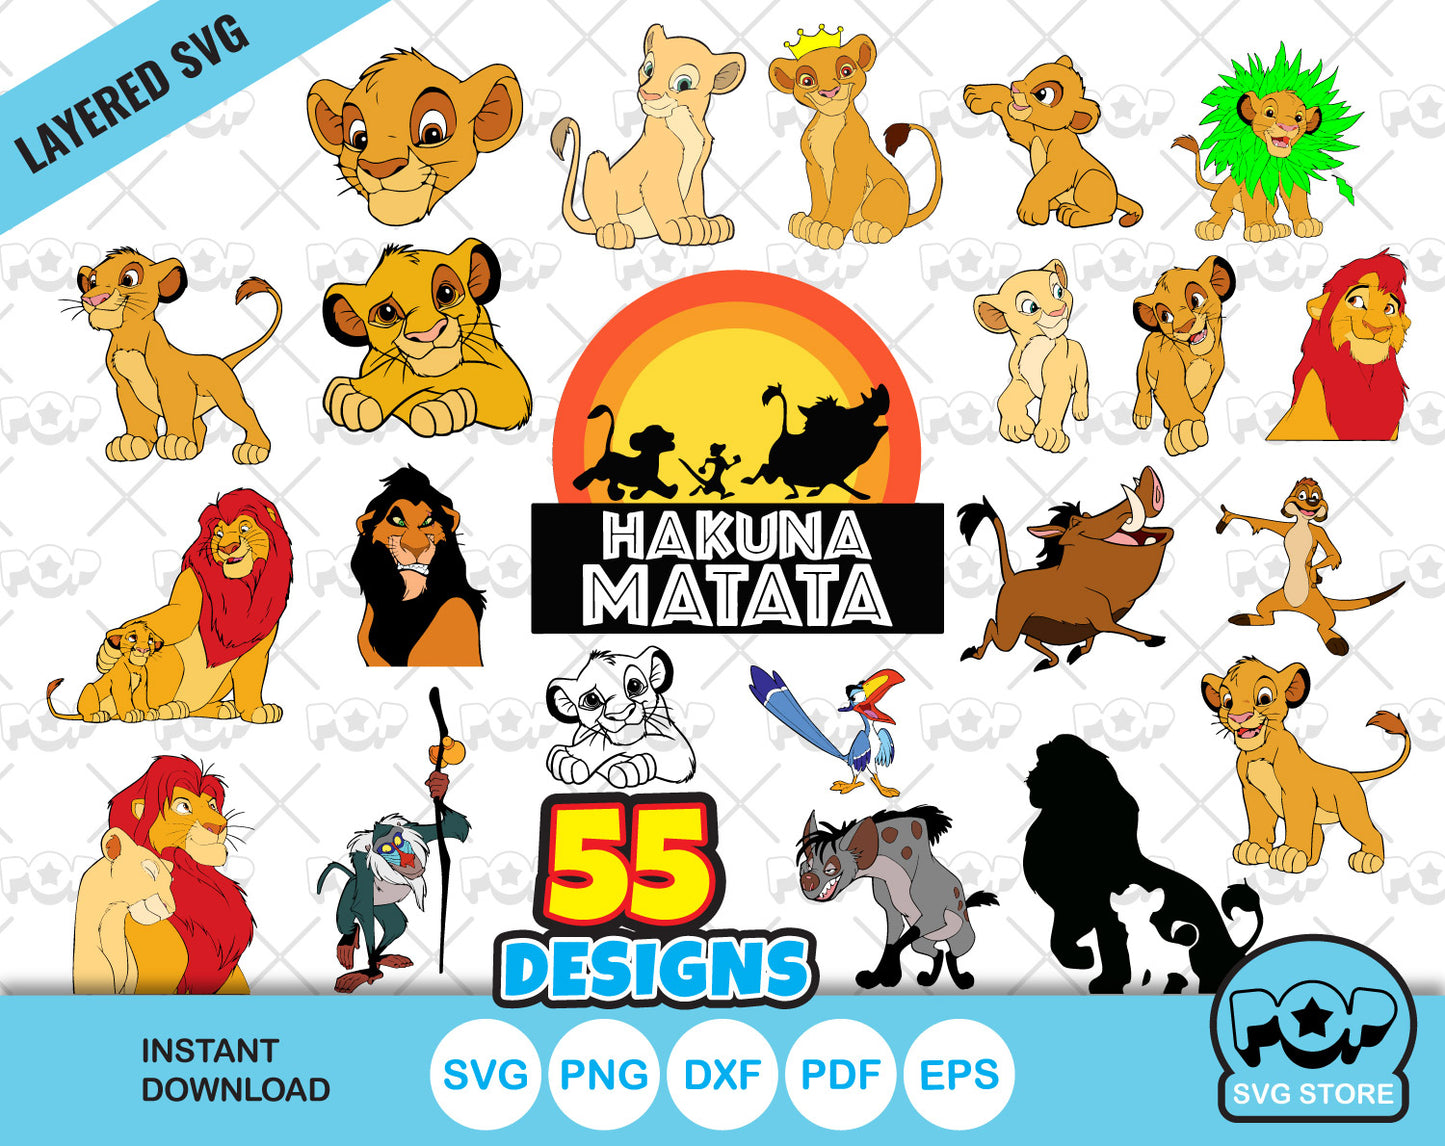 The Lion King 55 cliparts bundle, SVG cut files for Cricut Silhouette, SVG PNG DXF, instant download